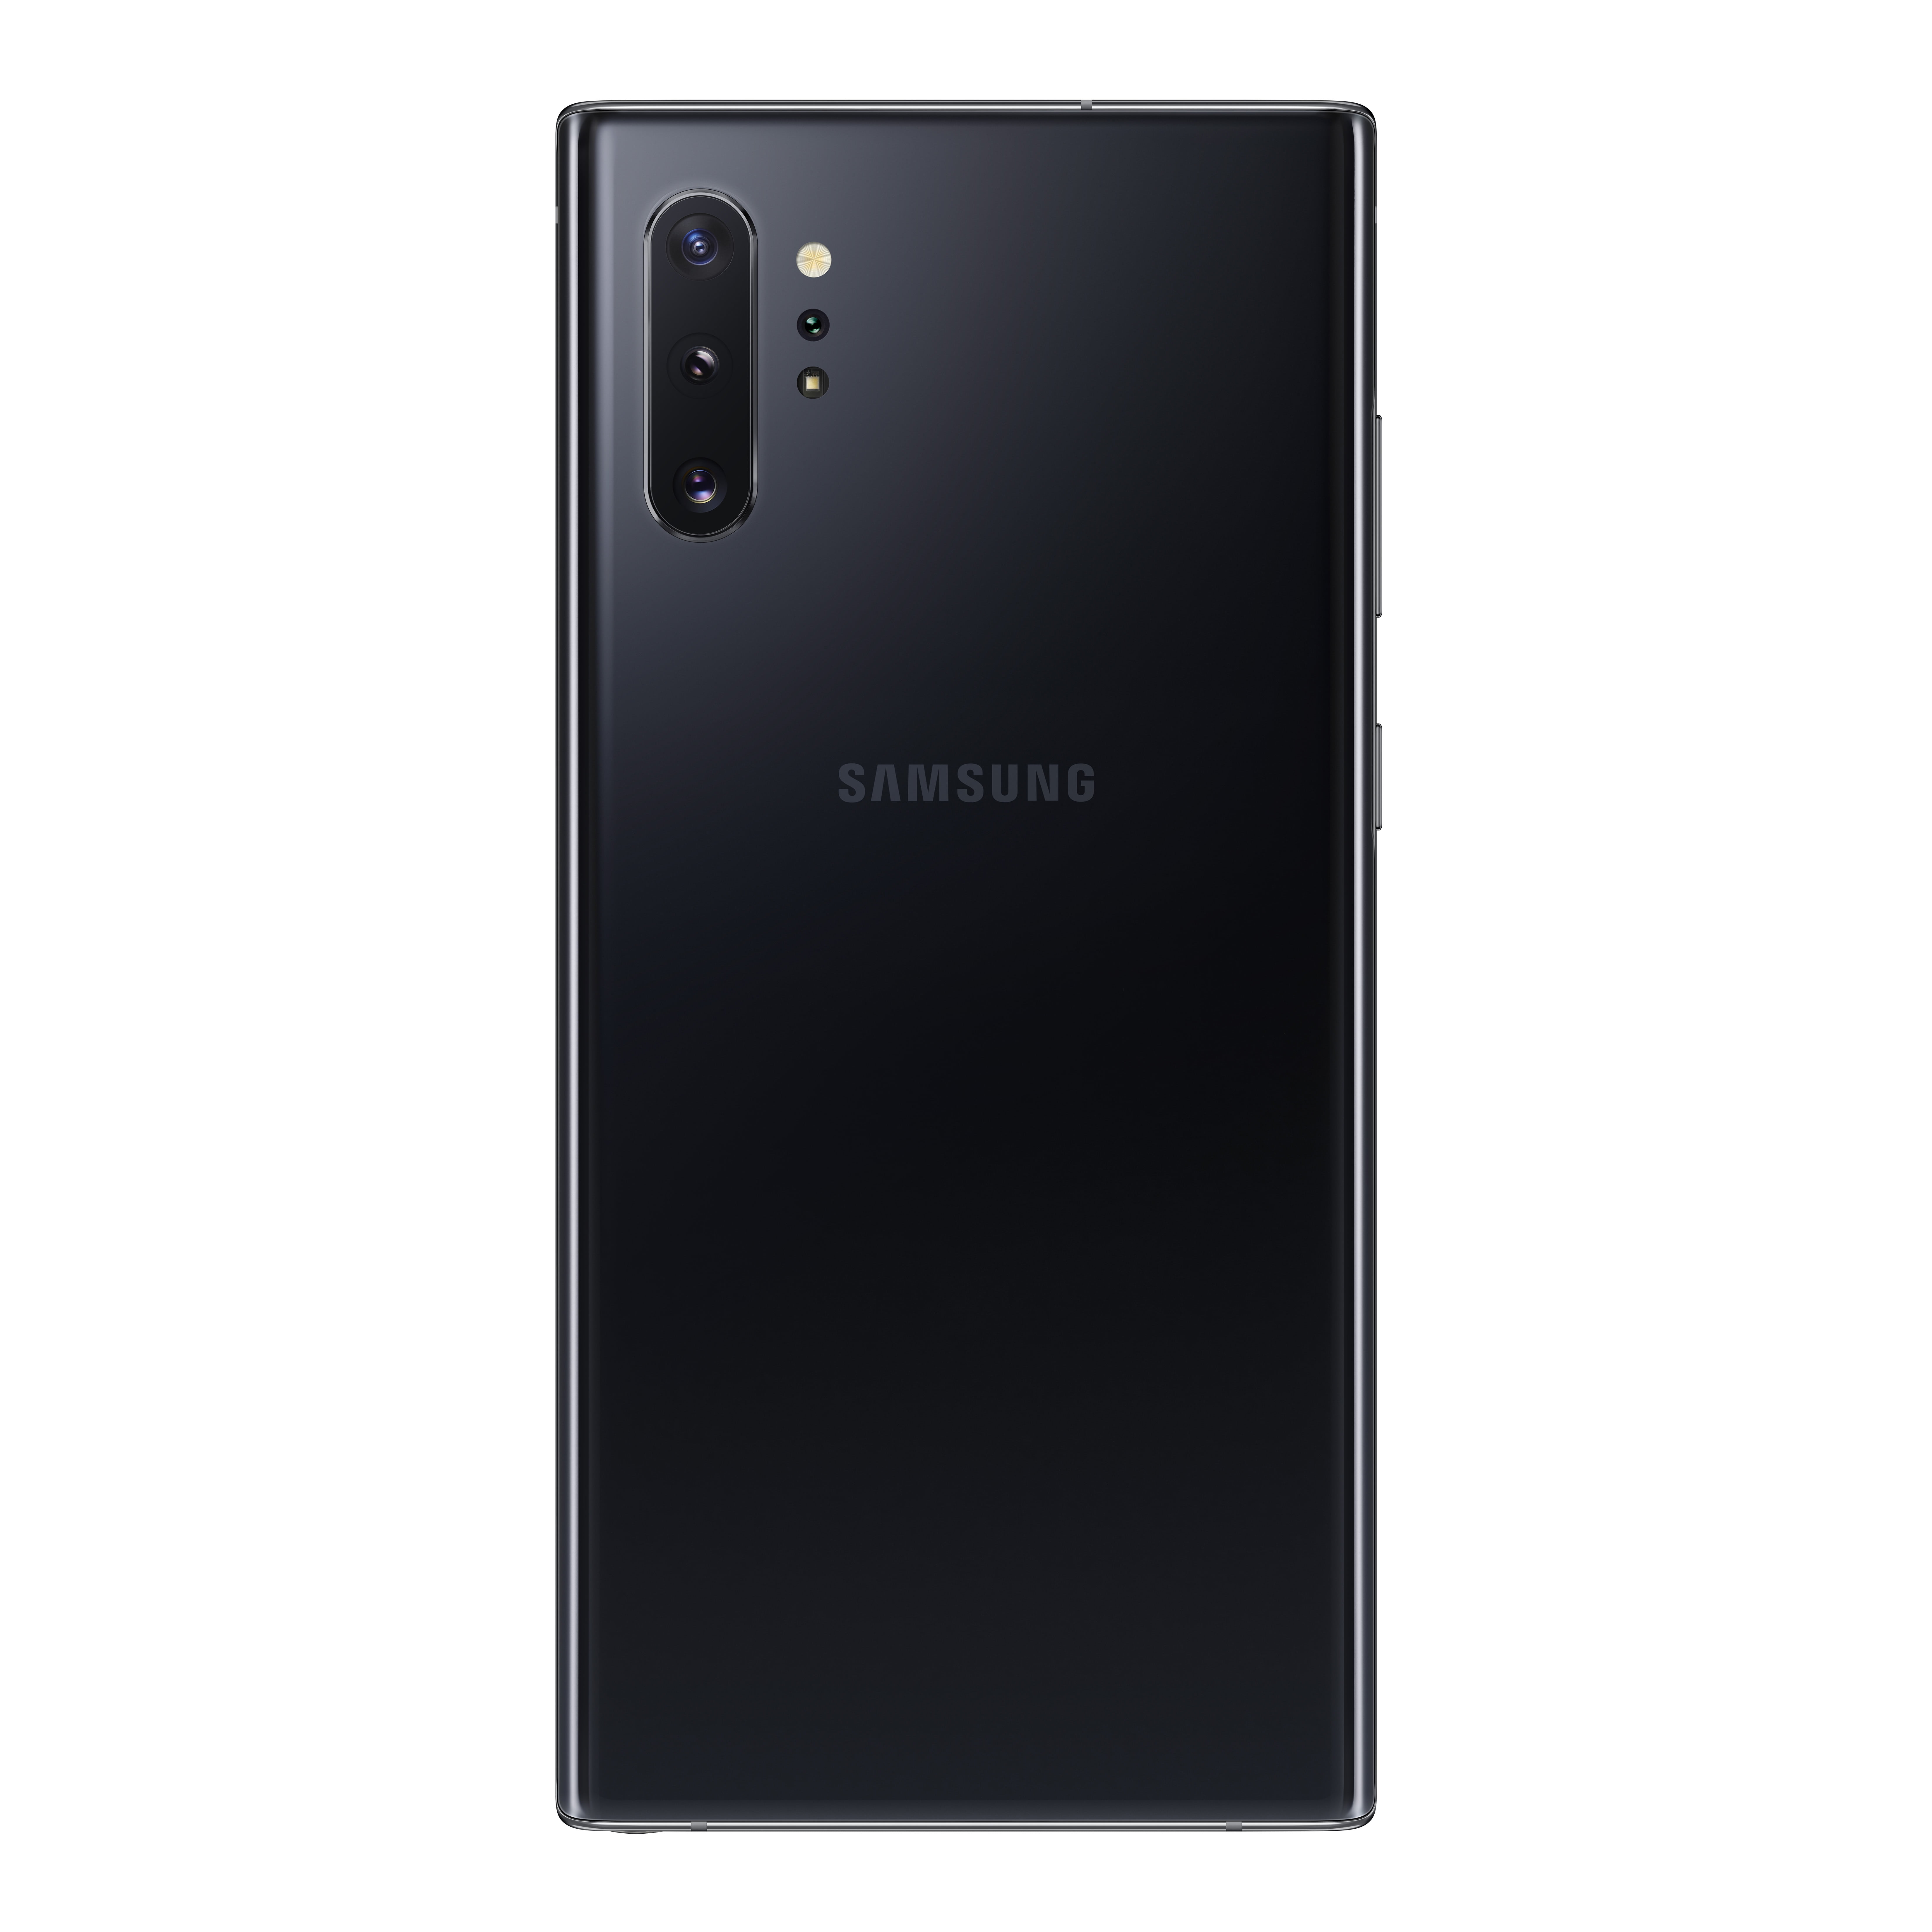 Samsung Galaxy Note10+ 256GB (Unlocked), Black - Walmart.com